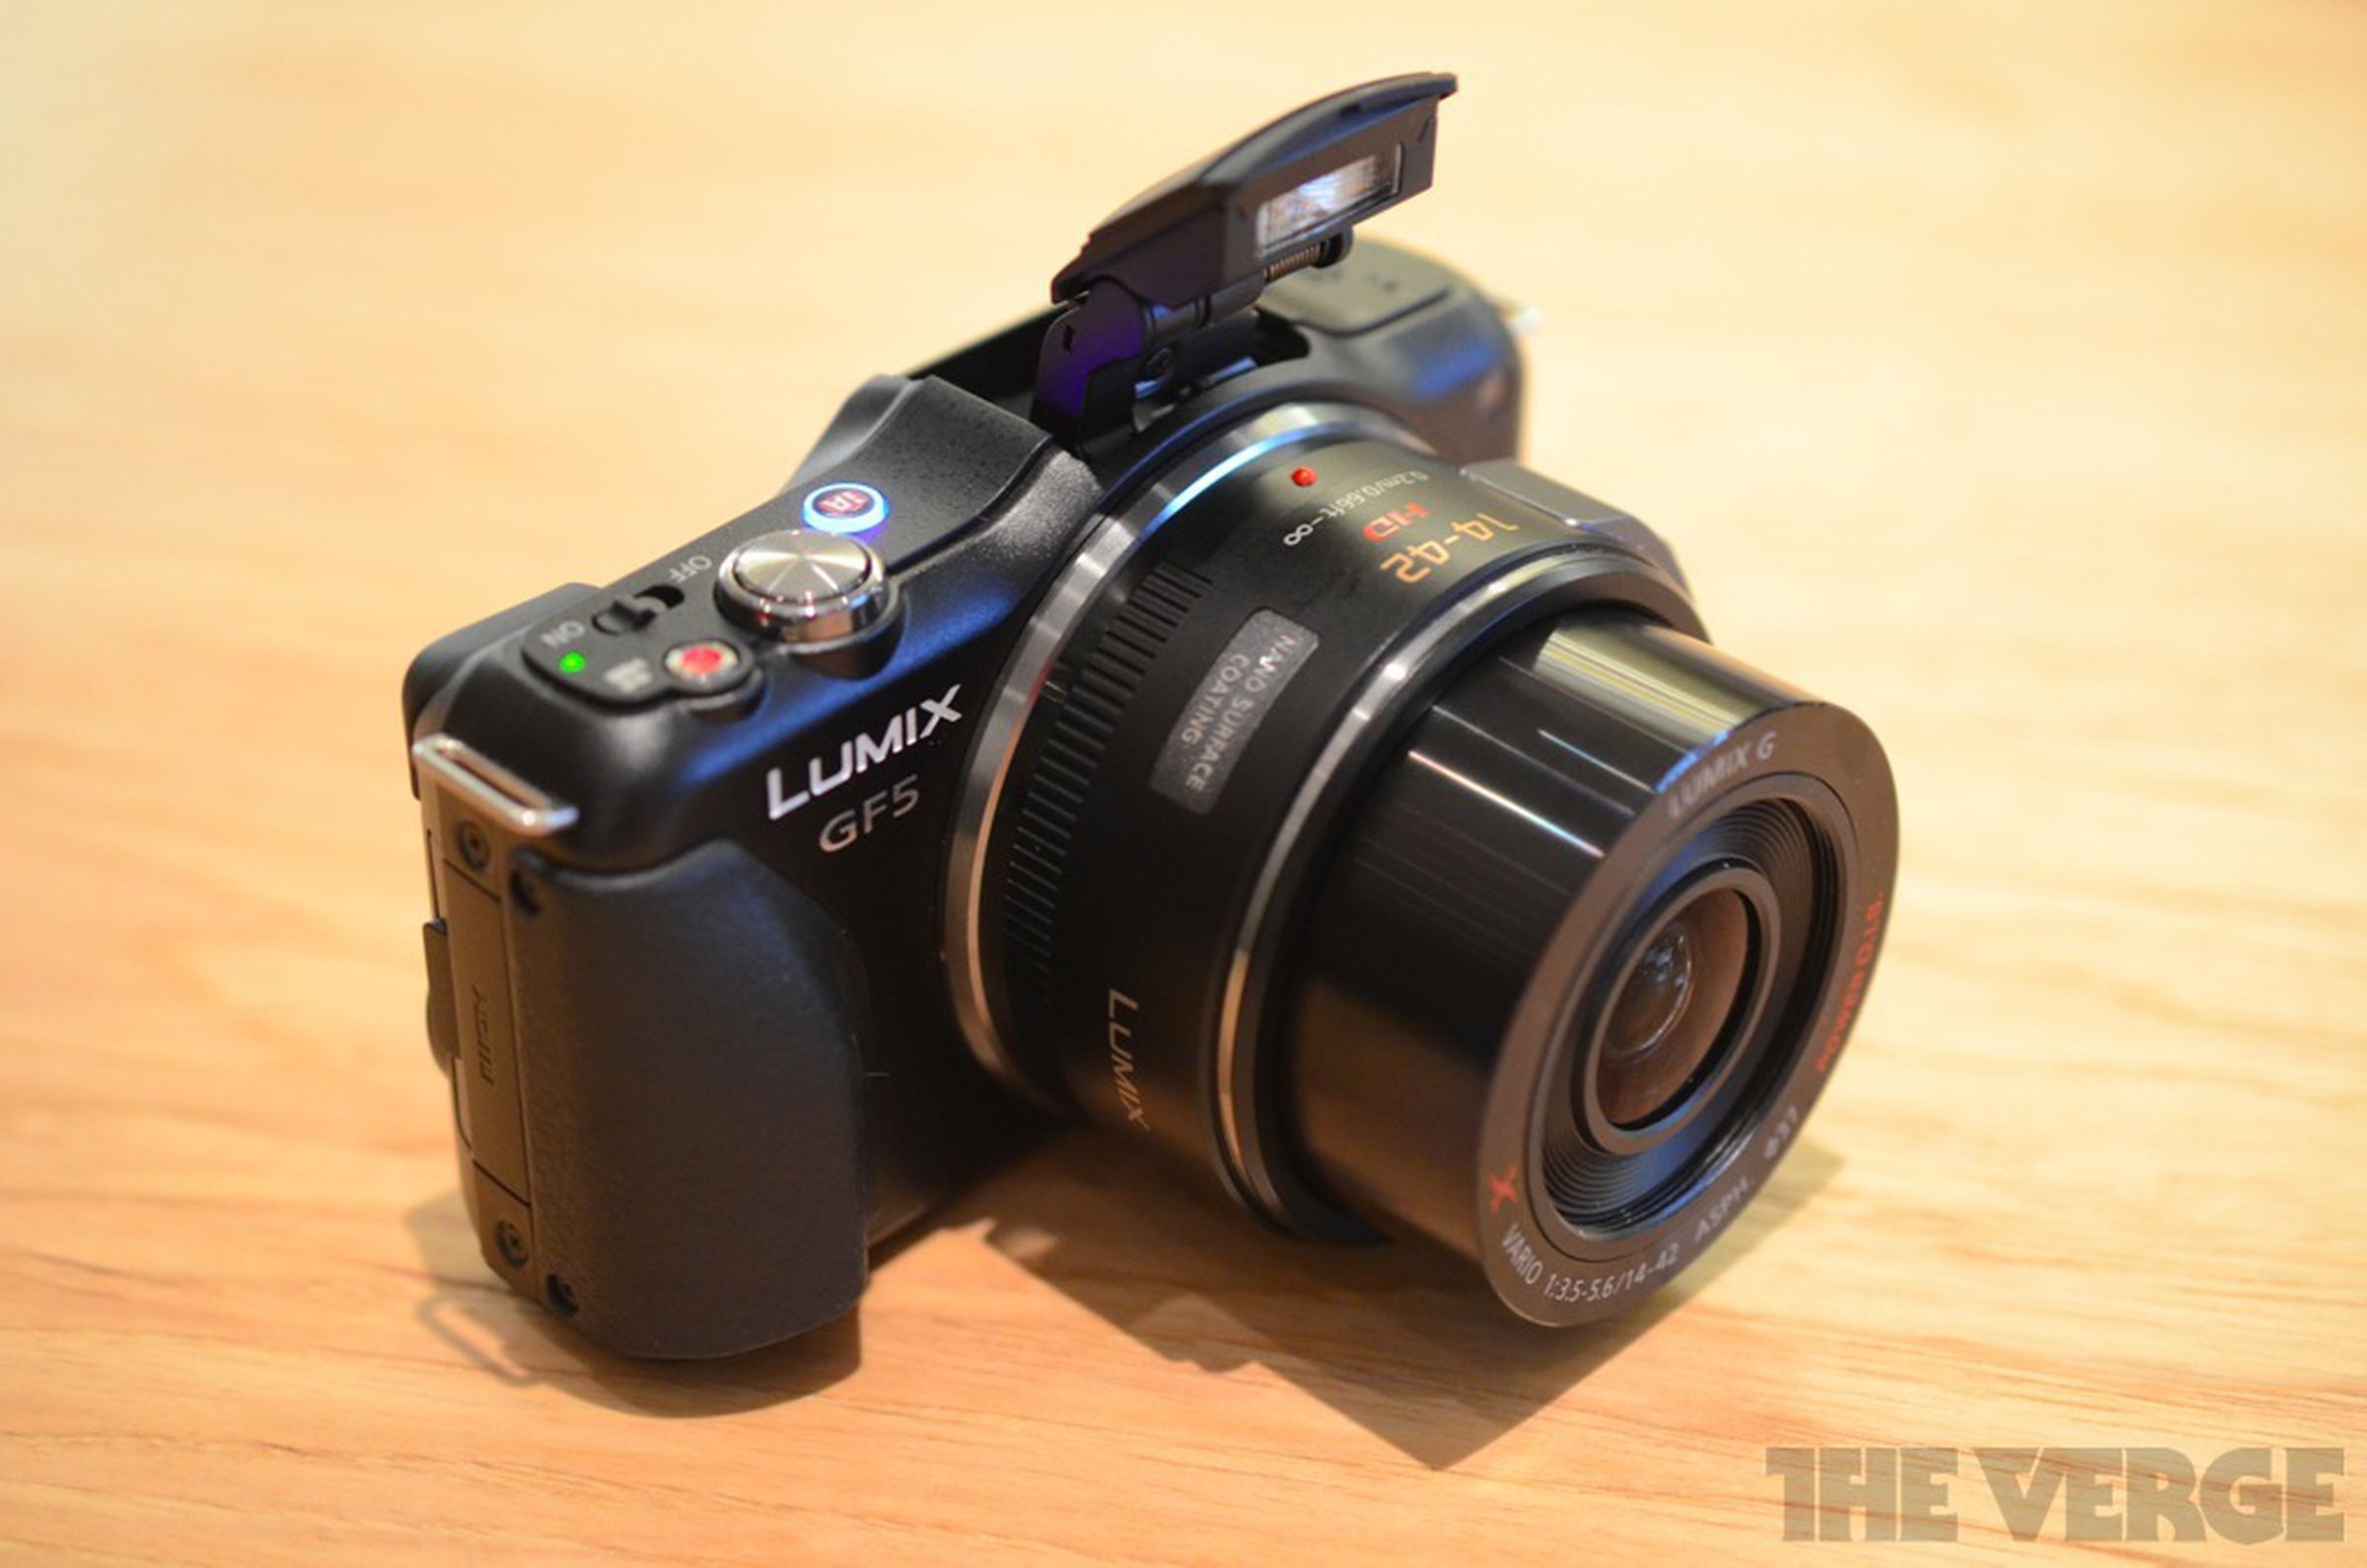 Panasonic Lumix DMC-GF5 hands-on pictures